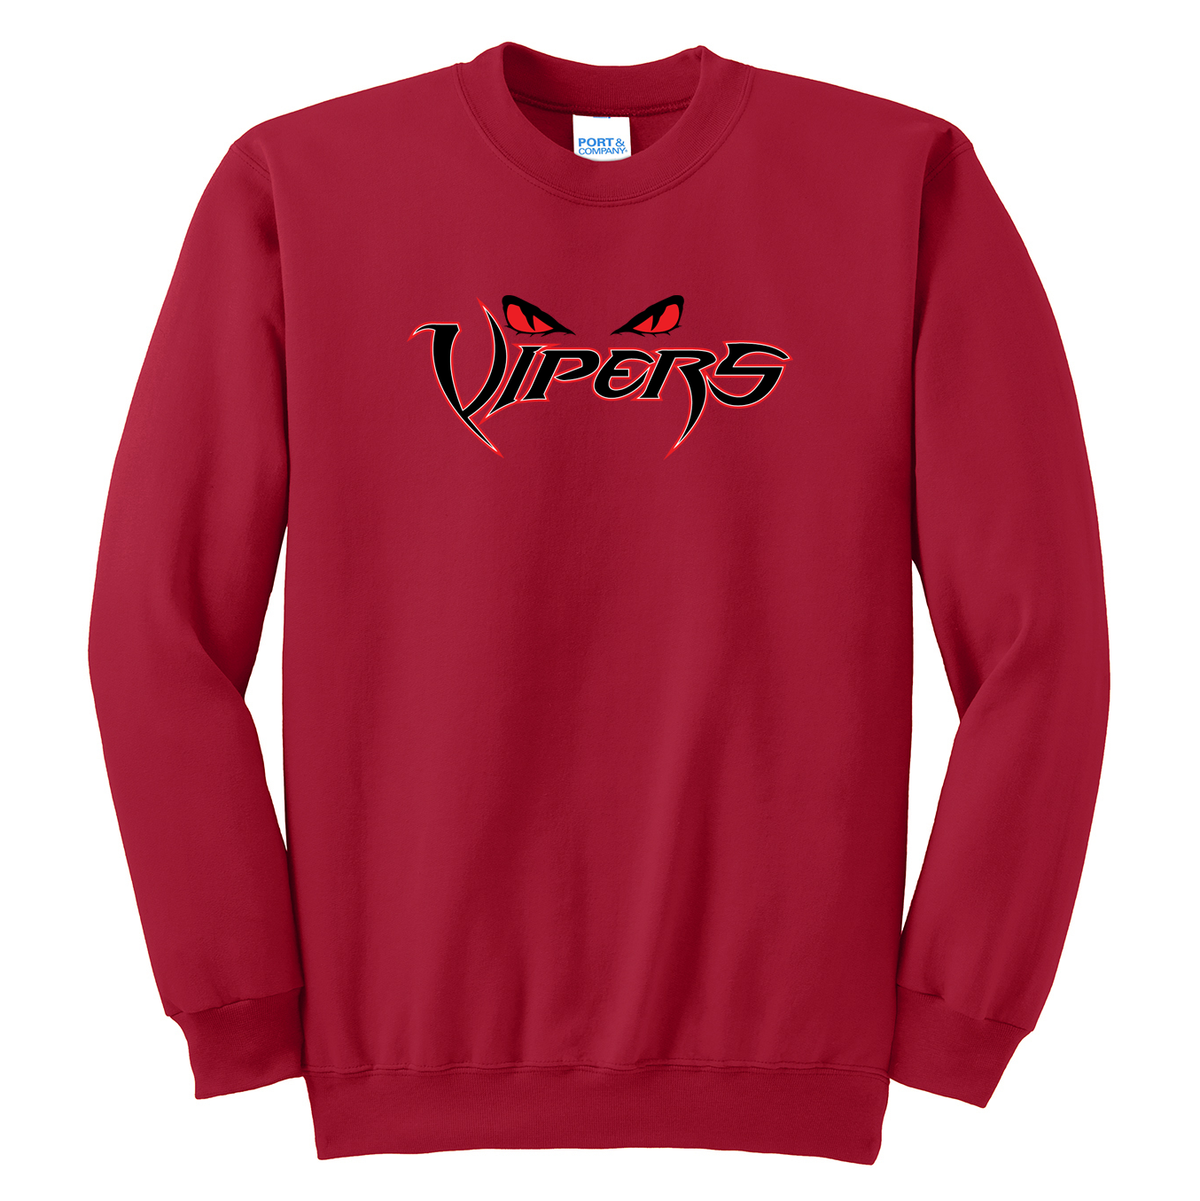 Vipers Crew Neck Sweater